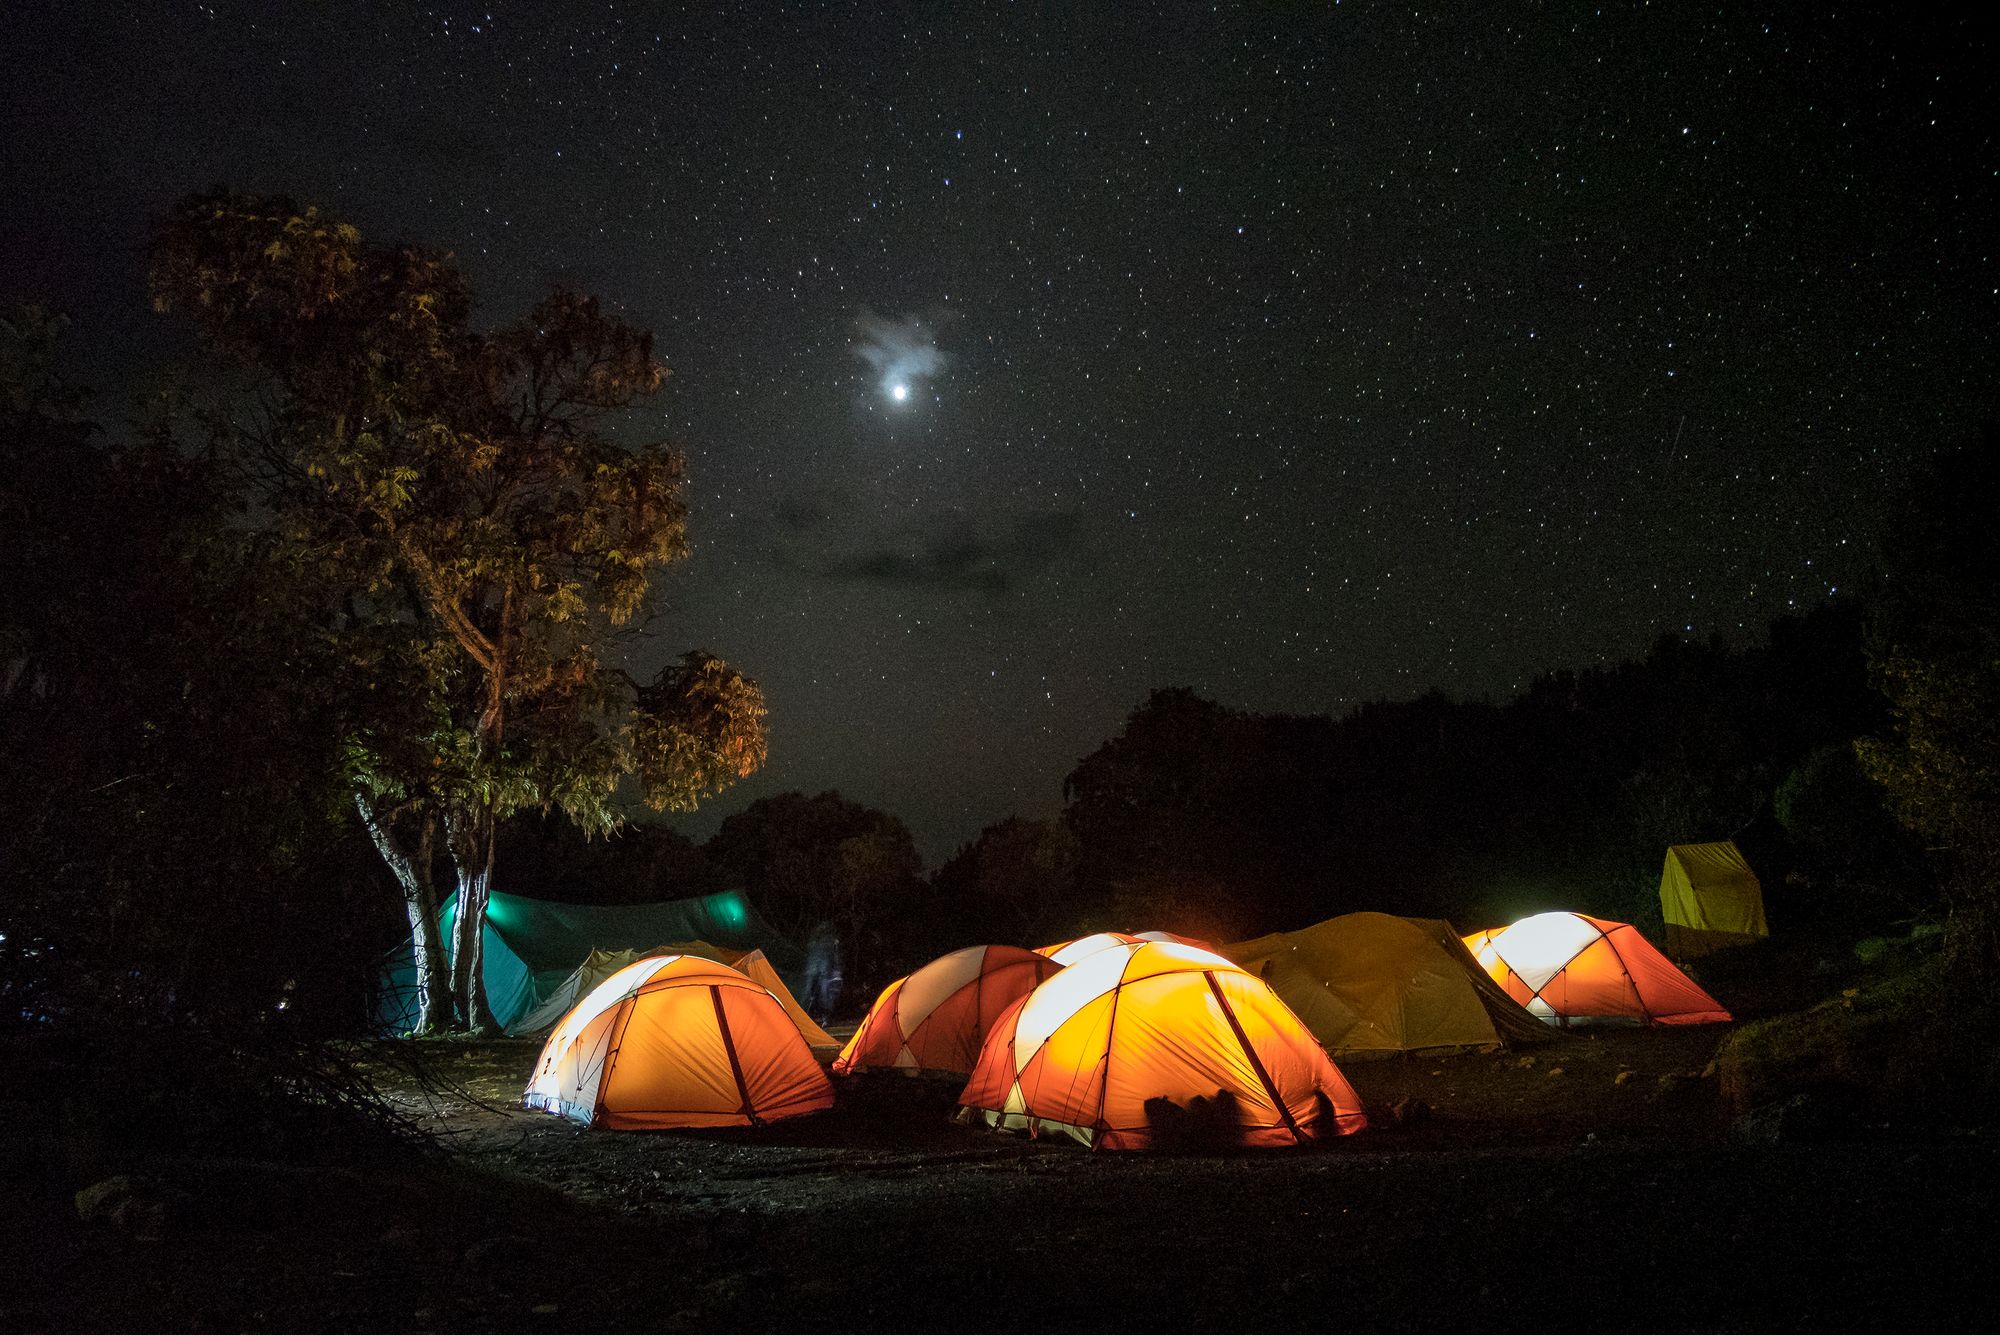 Tents for Kilimanjaro hikers on the Marangu route